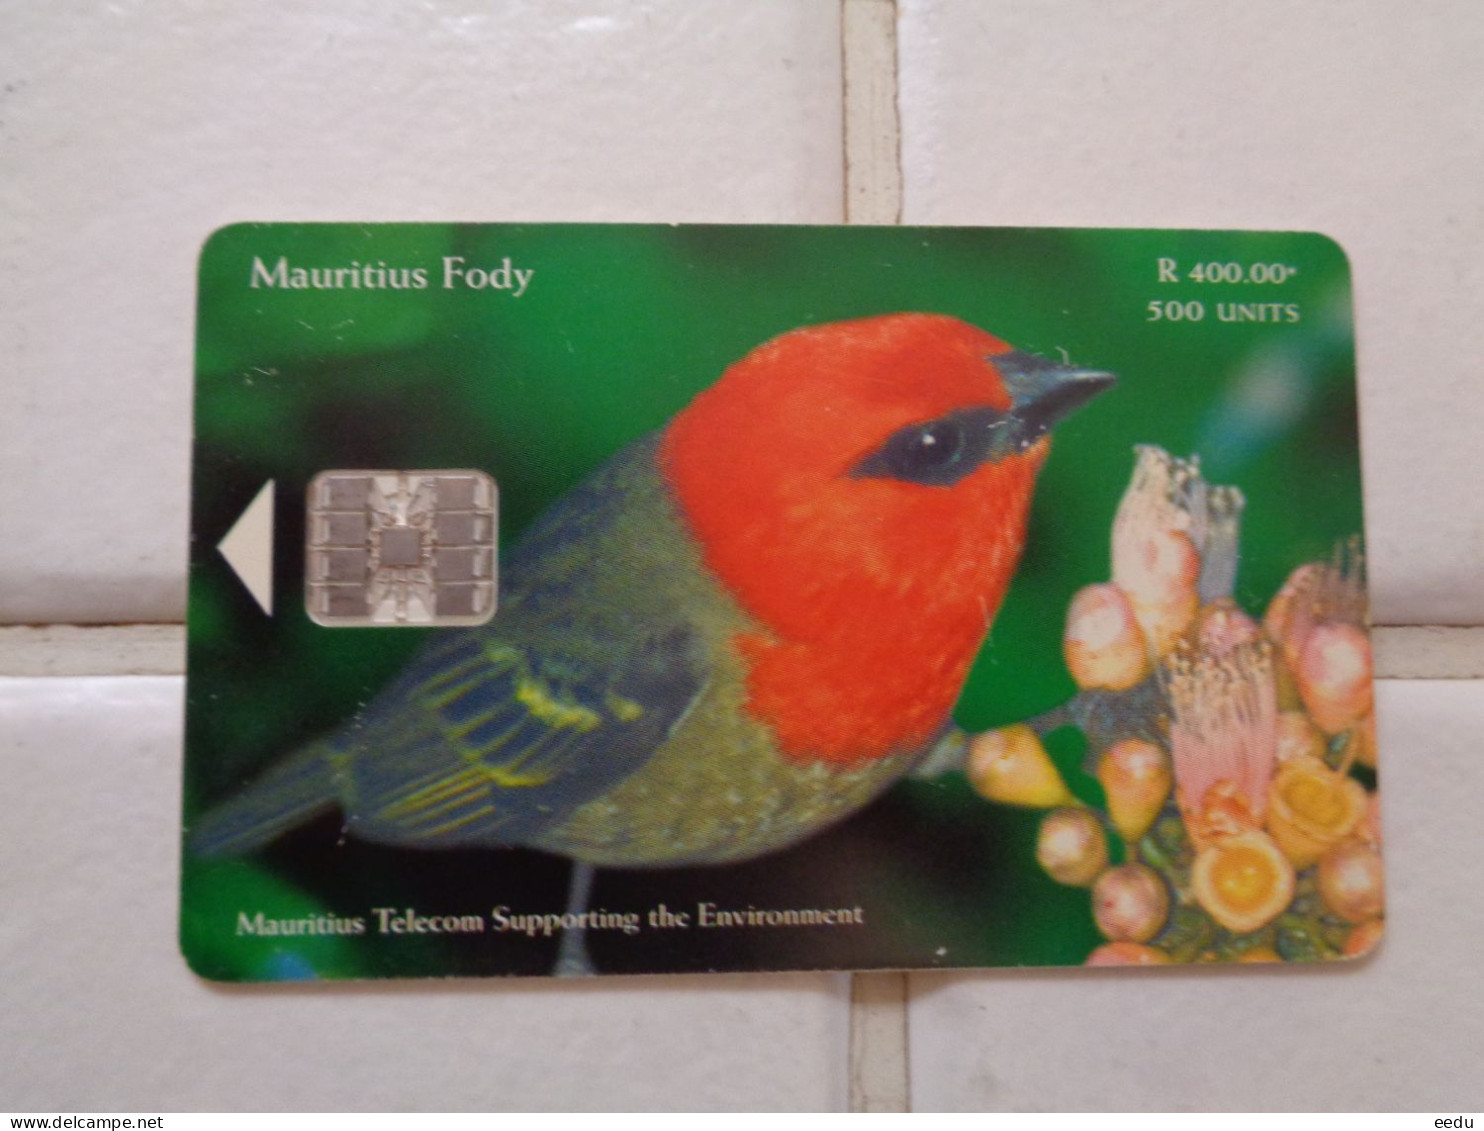 Mauritius Phonecard - Mauricio